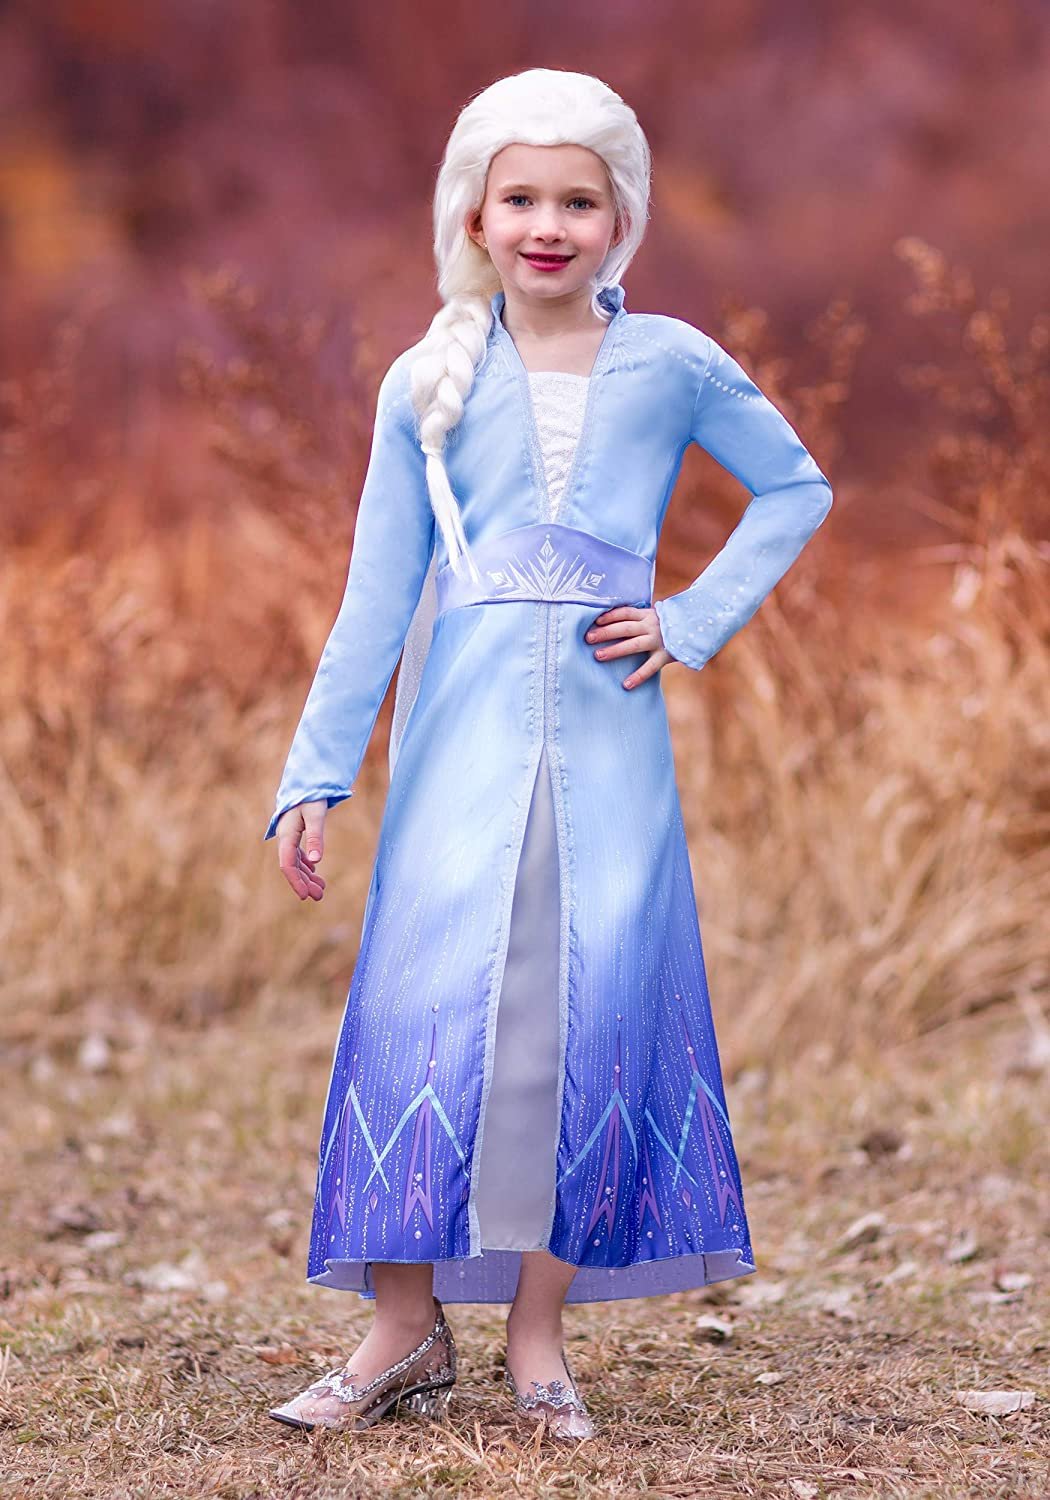 Disguise Girls Frozen 2 Elsa Wig